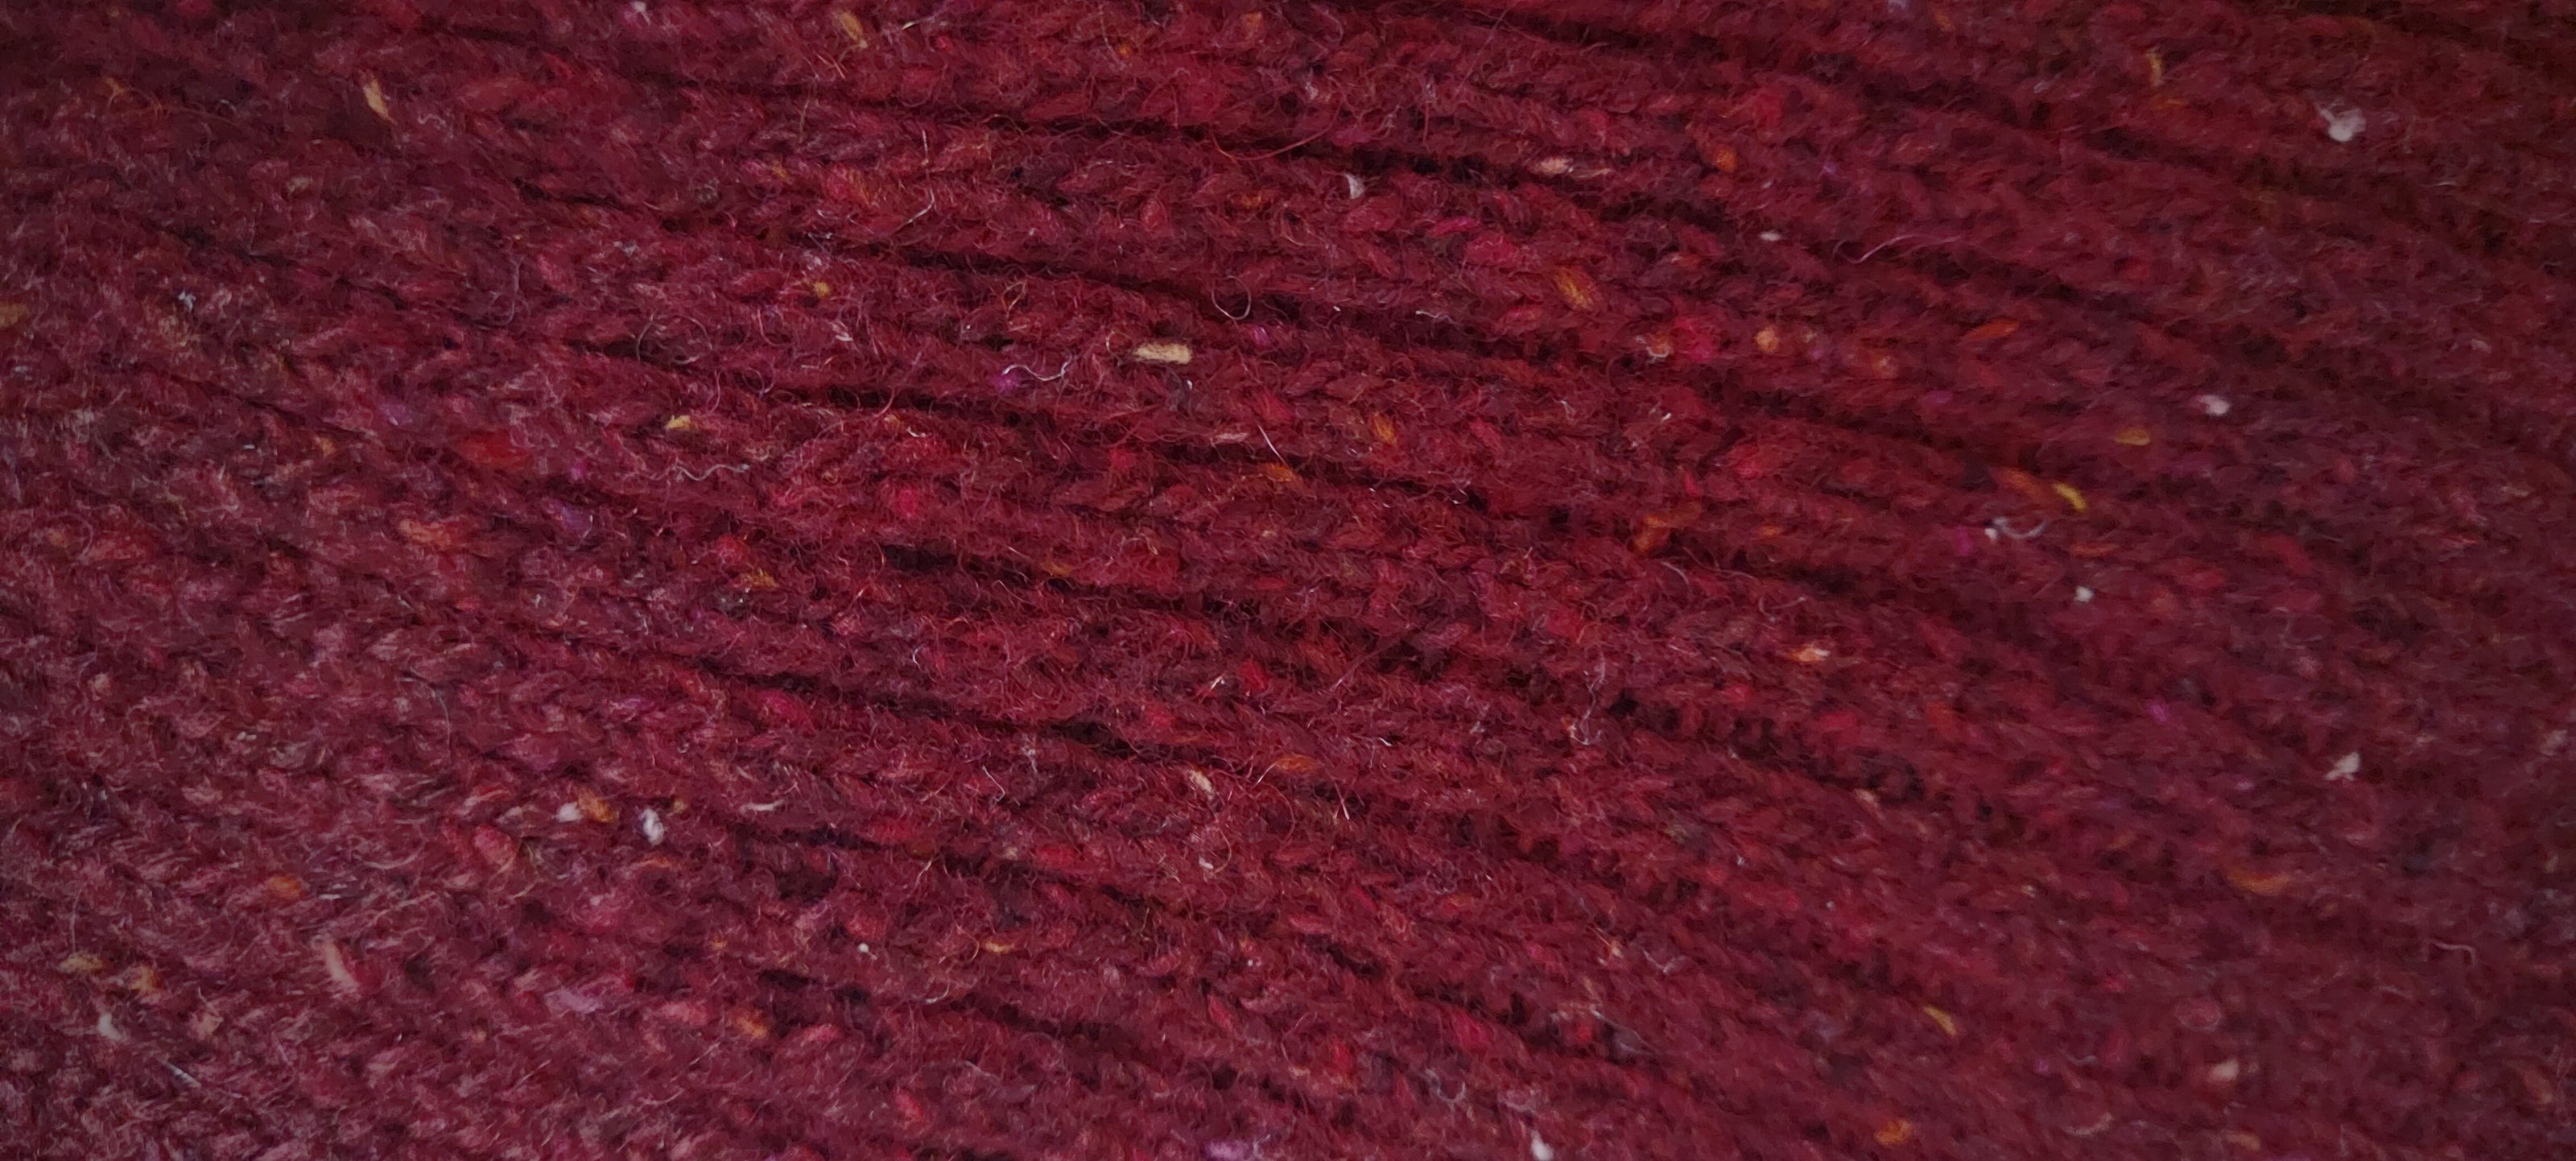 High-quality Italian Surplus Tweed Yarn from Industry